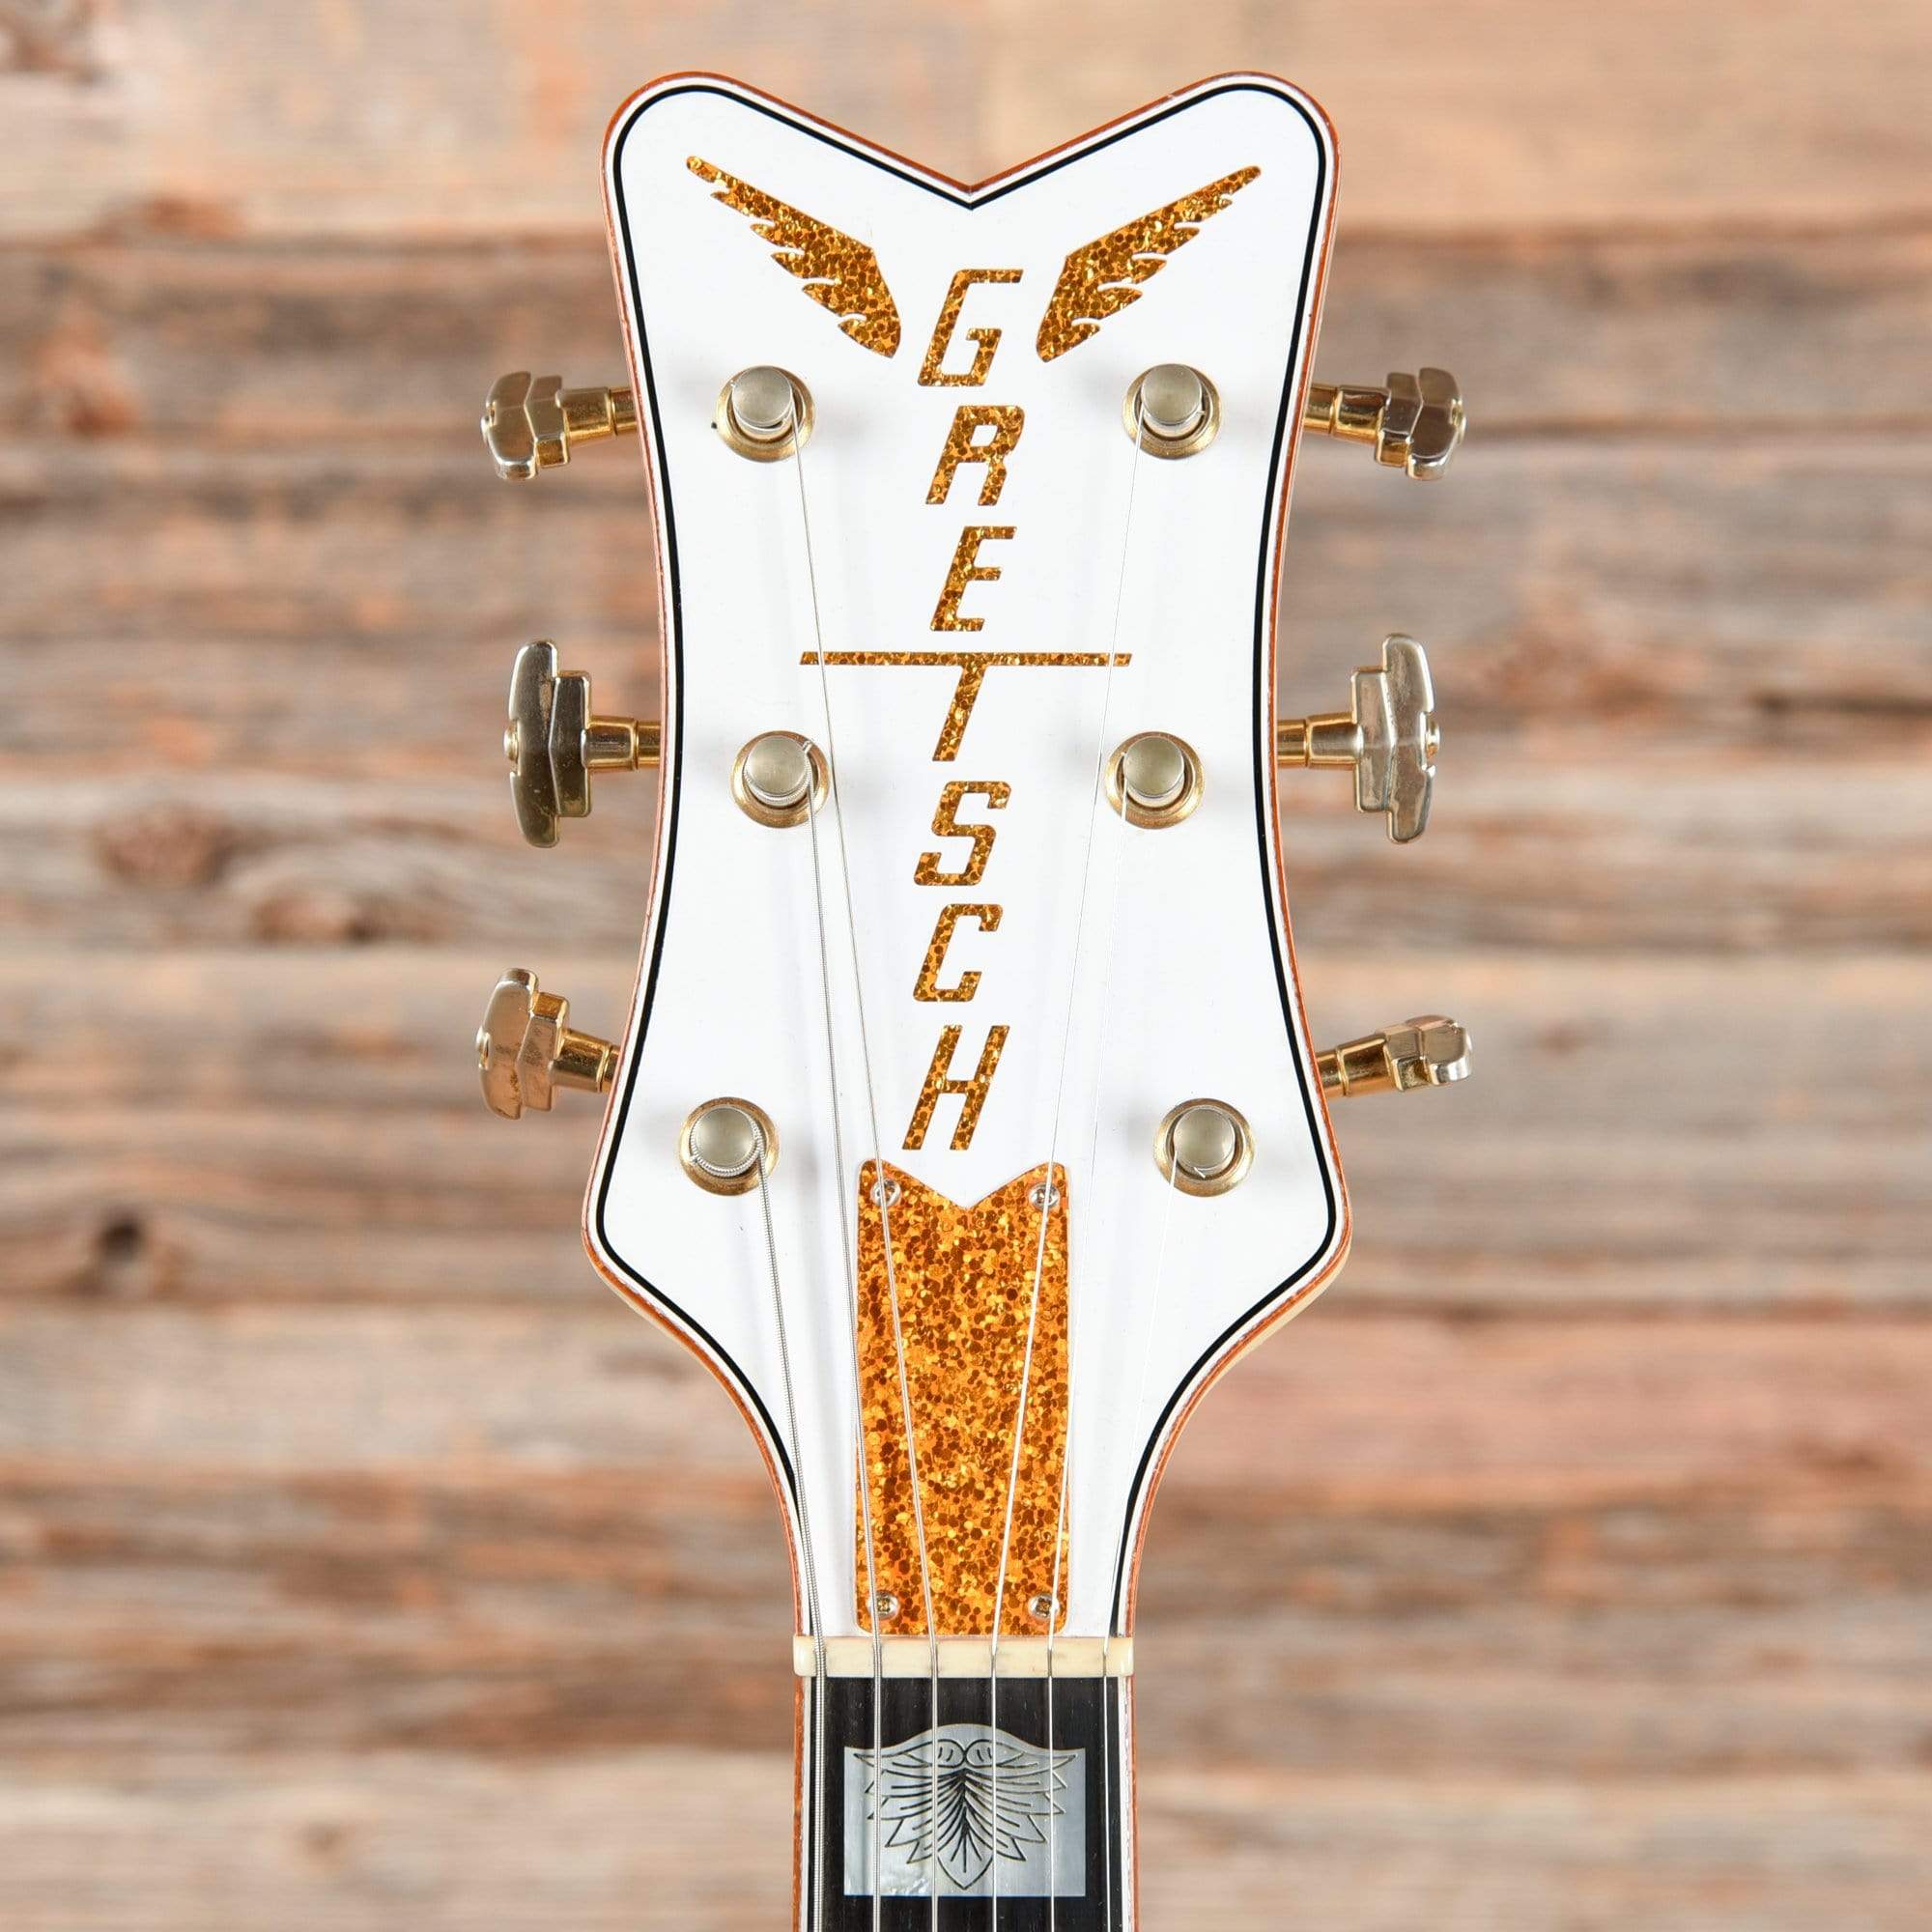 Gretsch Custom Shop Stephen Stern Masterbuilt Penguin White 2015 Electric Guitars / Solid Body